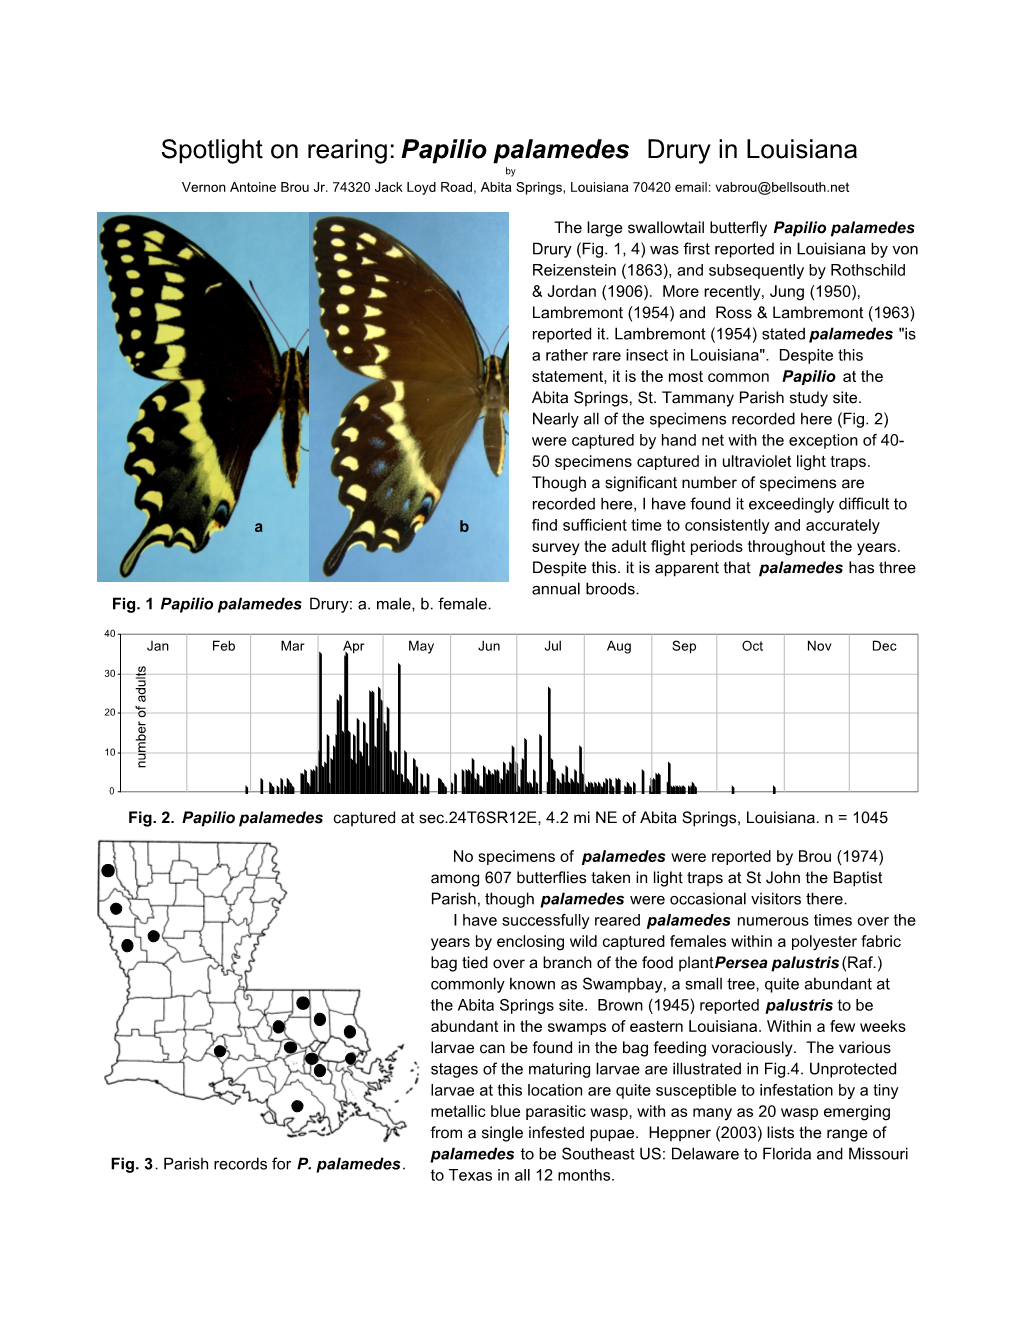 Papilio Palamedes Drury in Louisiana by Vernon Antoine Brou Jr